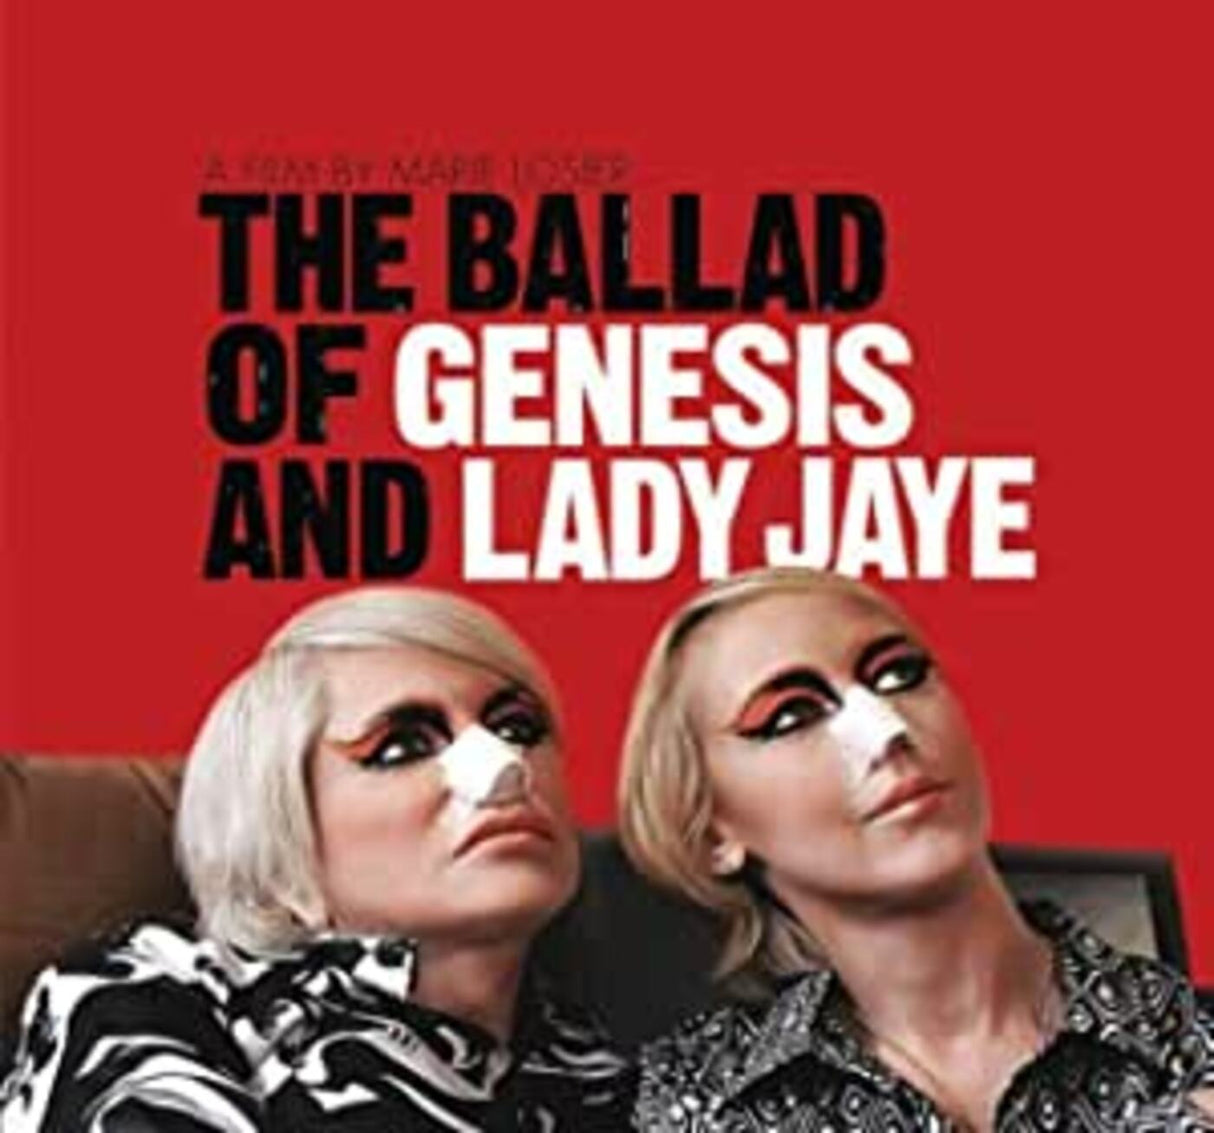 The Ballad Of Genesis And Lady Jaye - Soundtrack [CD]